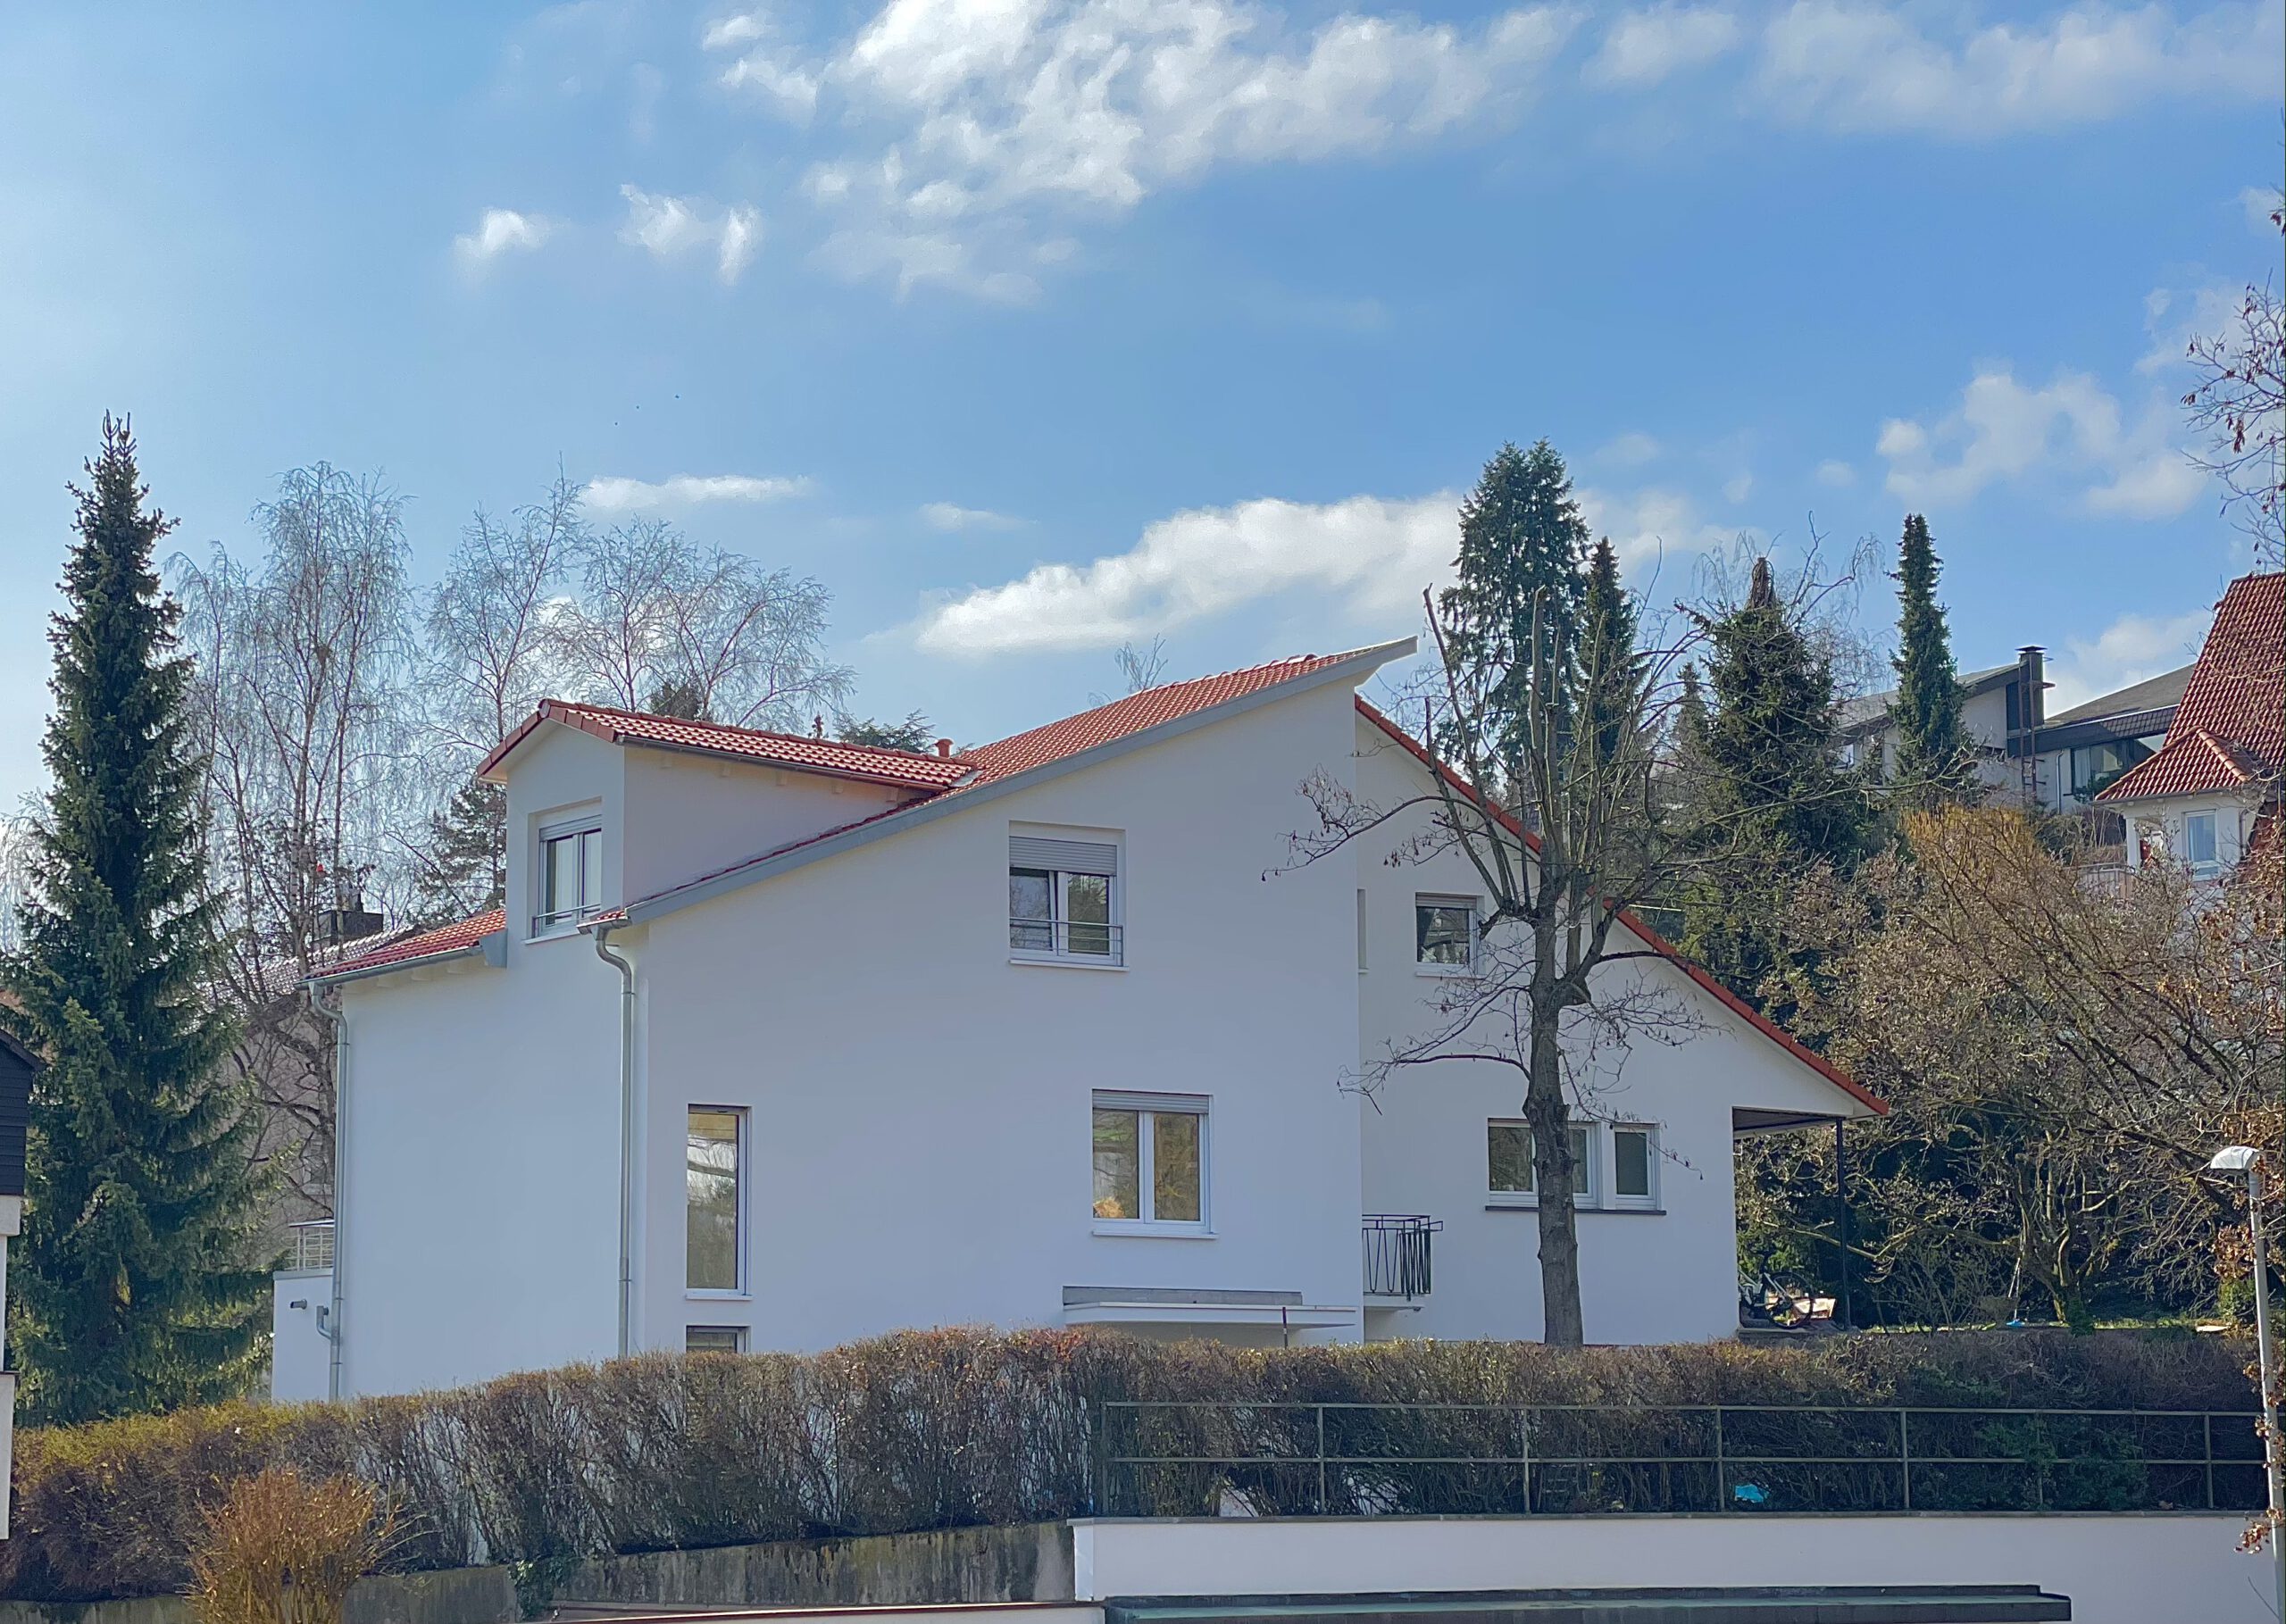 Zogjani Bauunternehmen - Referenz: Mehrfamilienhaus in Stuttgart-Vaihingen